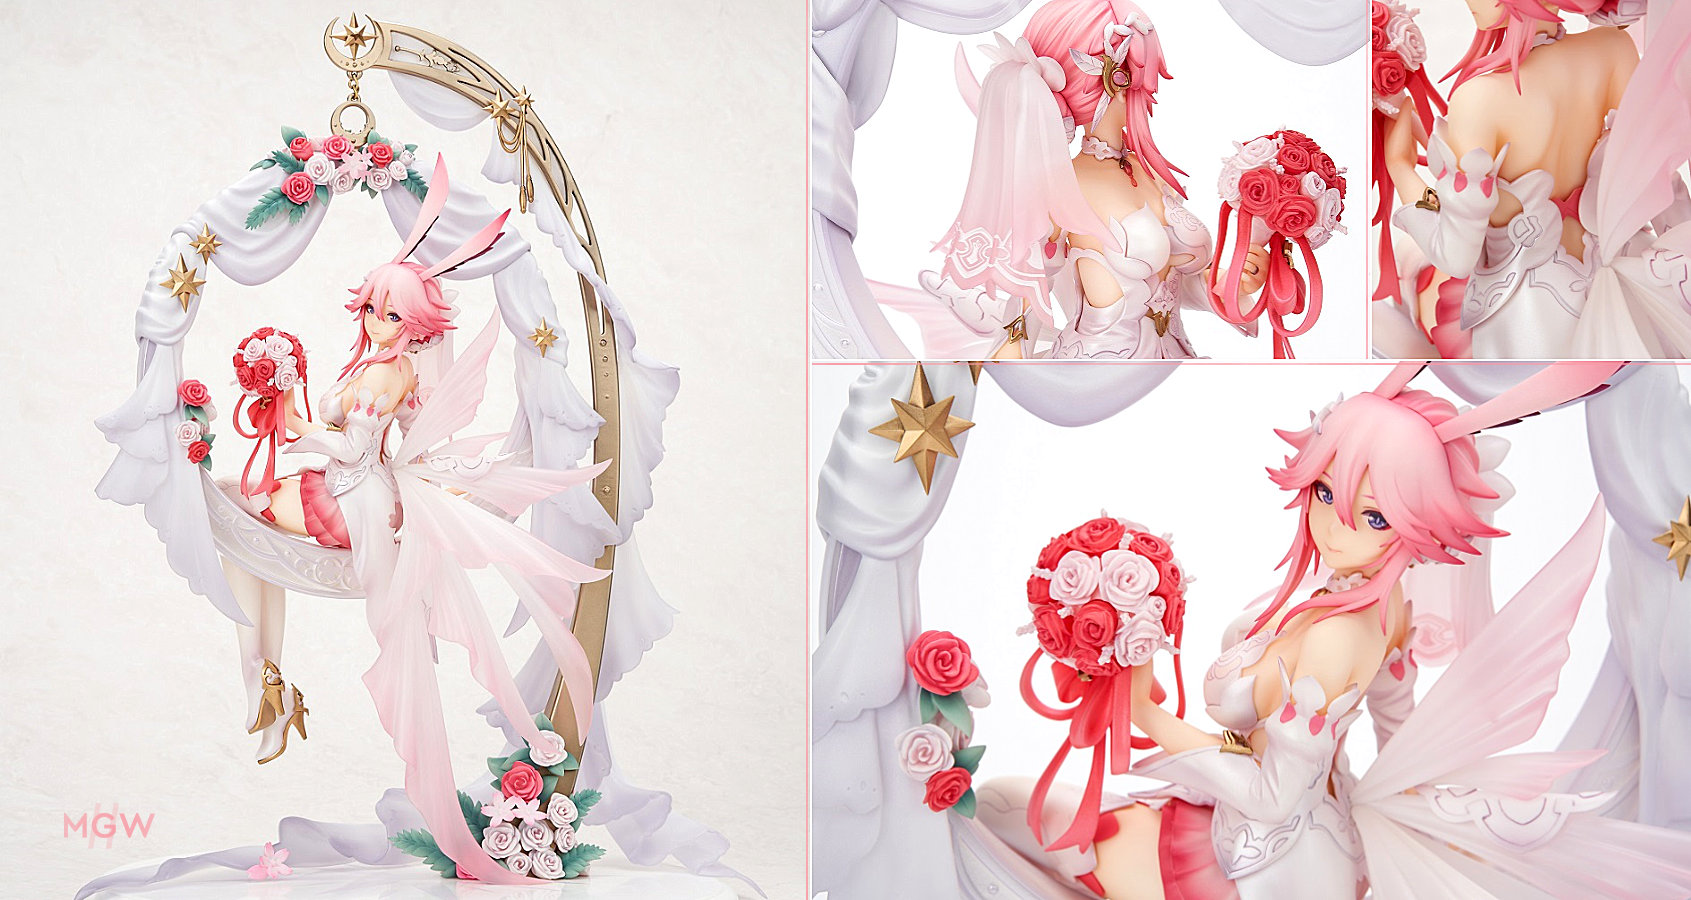 Houkai 3rd Yae Sakura Dream Raiment by APEX x miHoYo MGW Anime Figure Guide